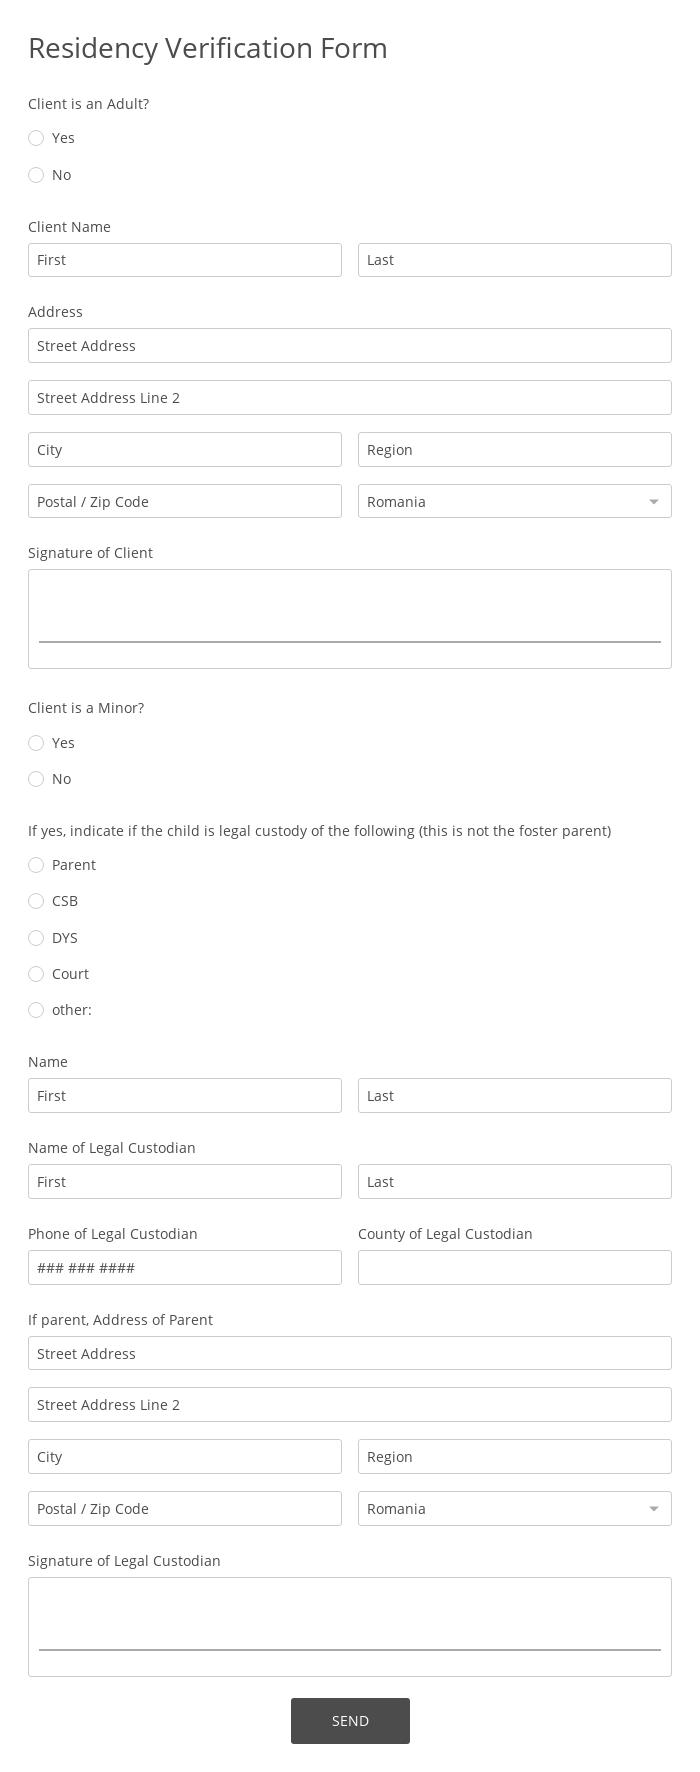 Residency Verification Form